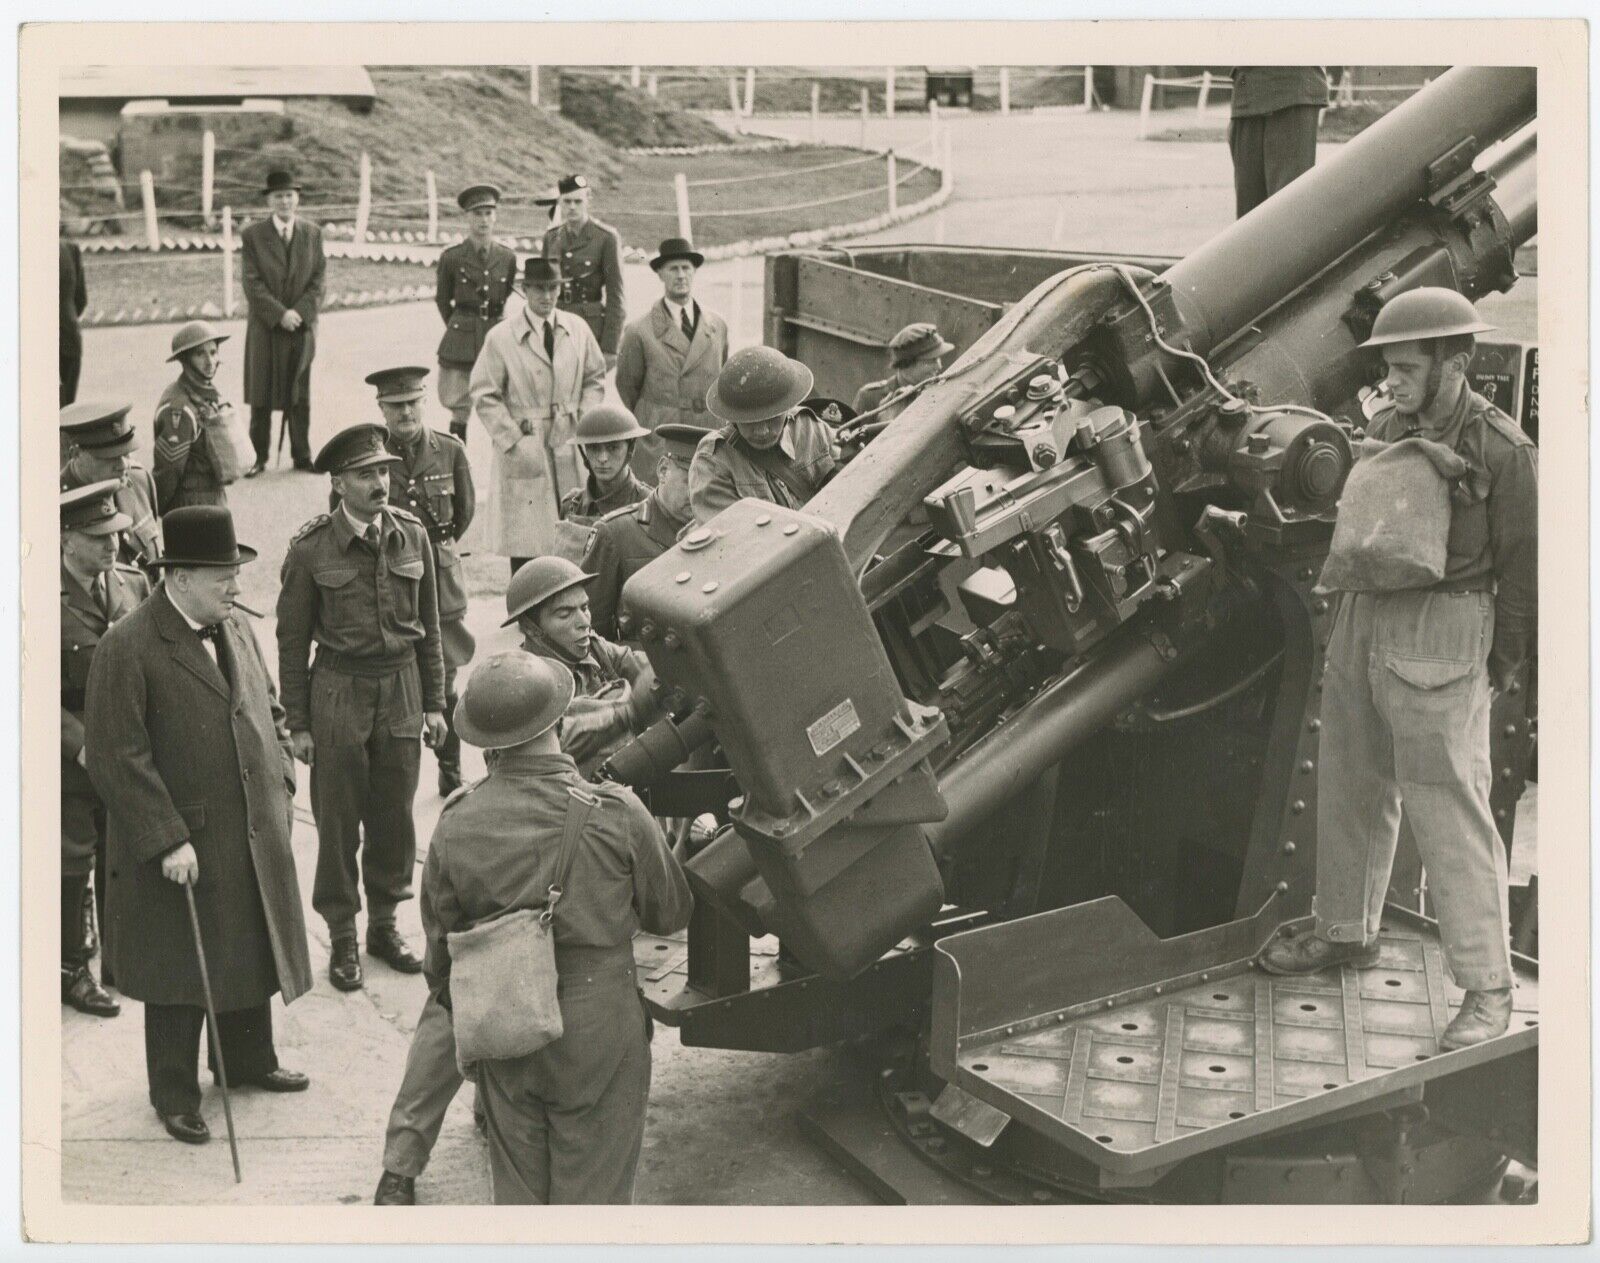 17 October 1941 press photo of Churchill inspecting an antiaircraft gun and crew